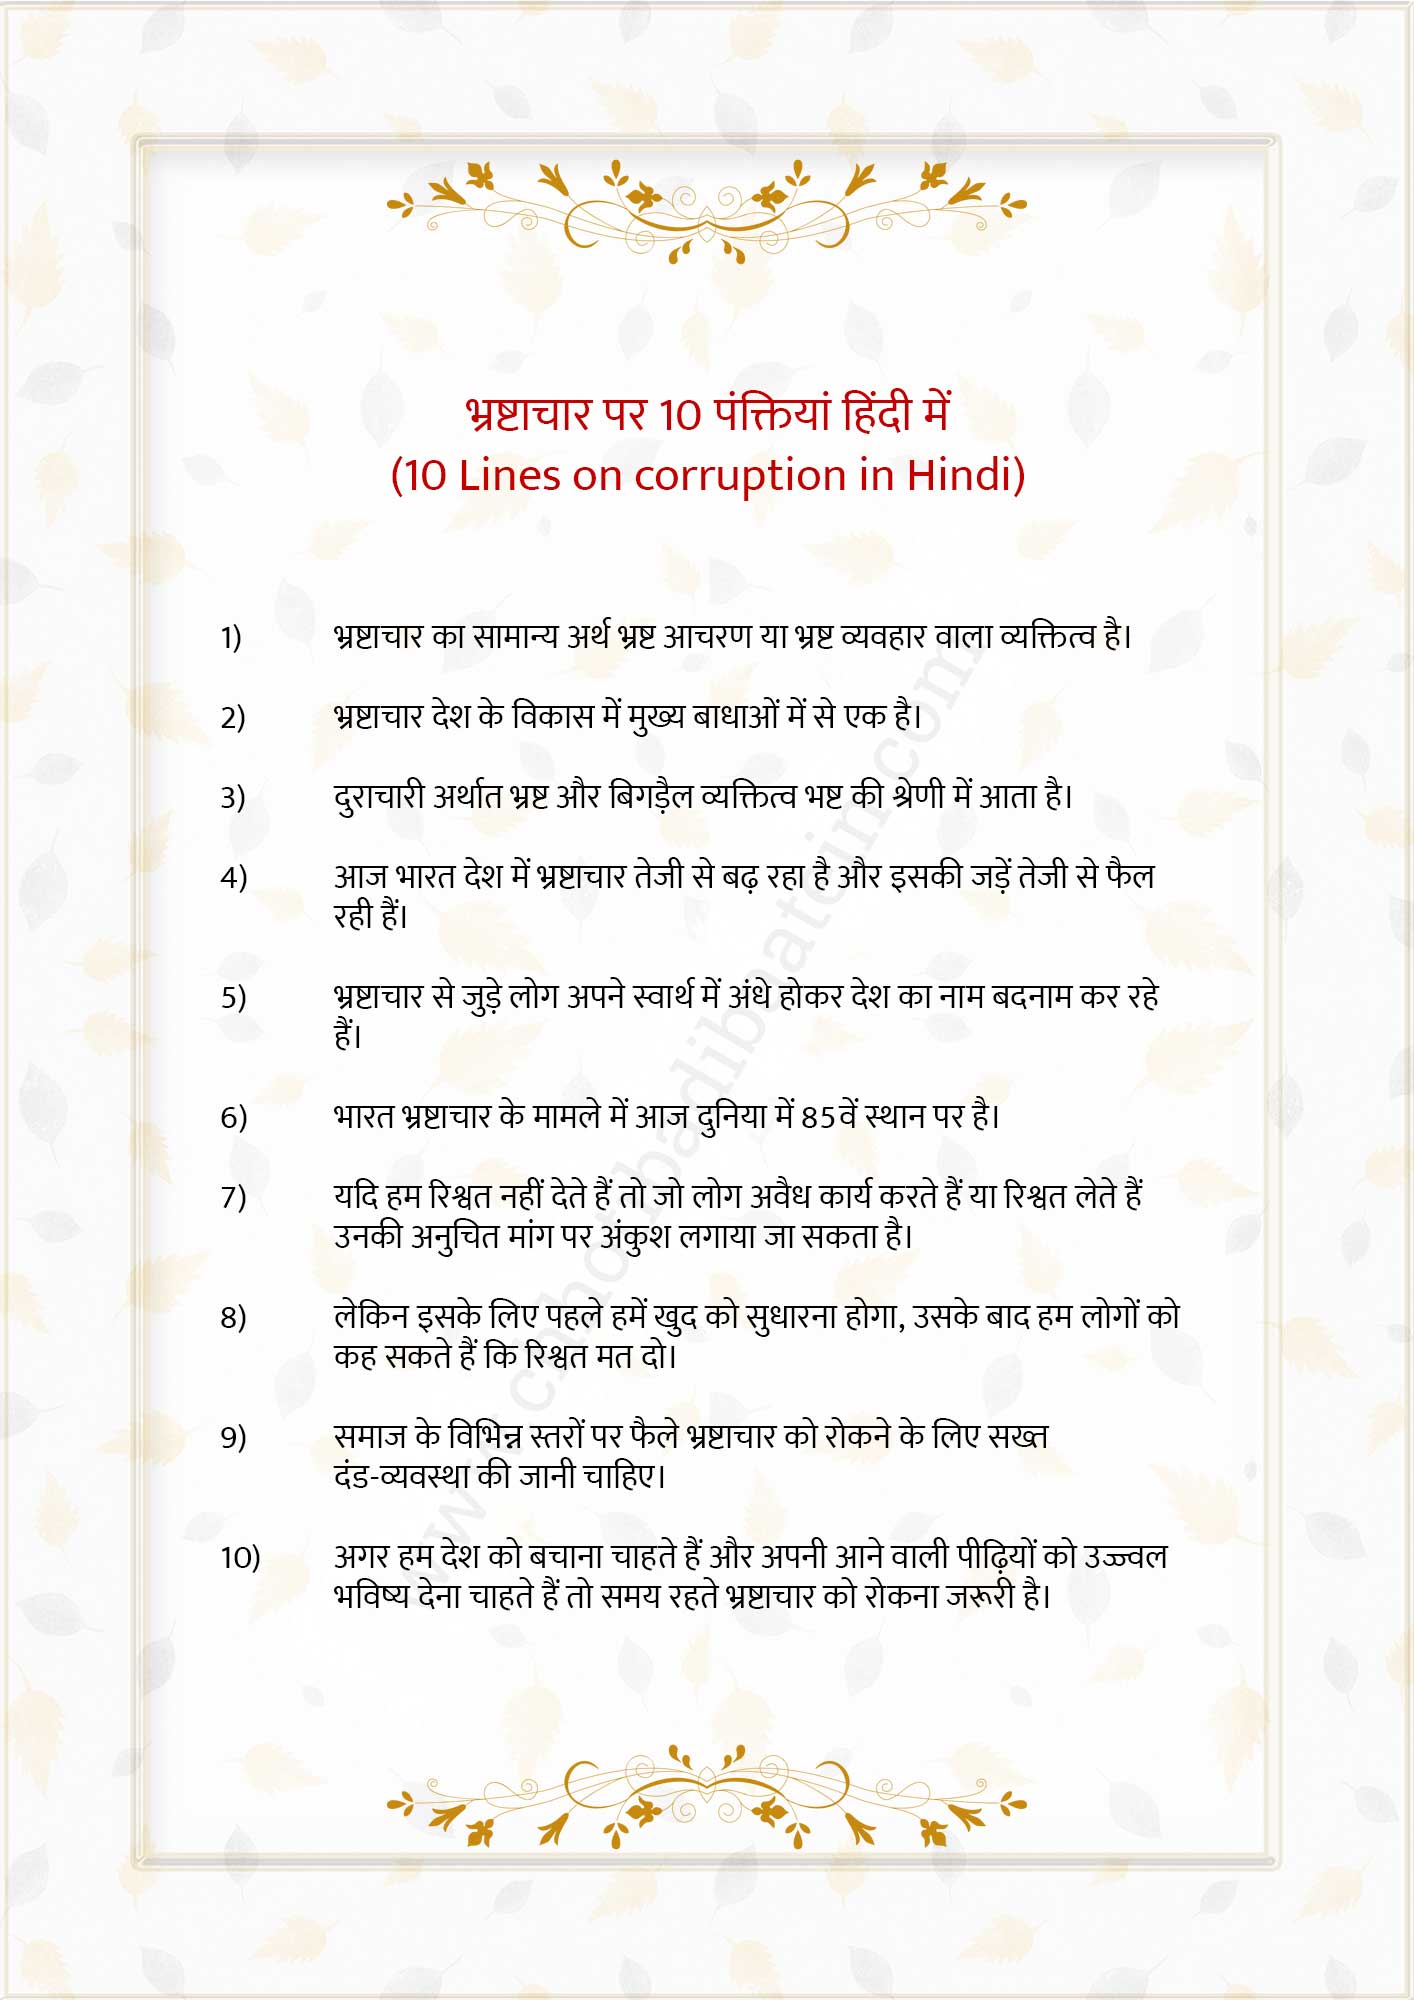 Short and Long Essay on Corruption in Hindi, Bhrashtachar par Nibandh Hindi mein